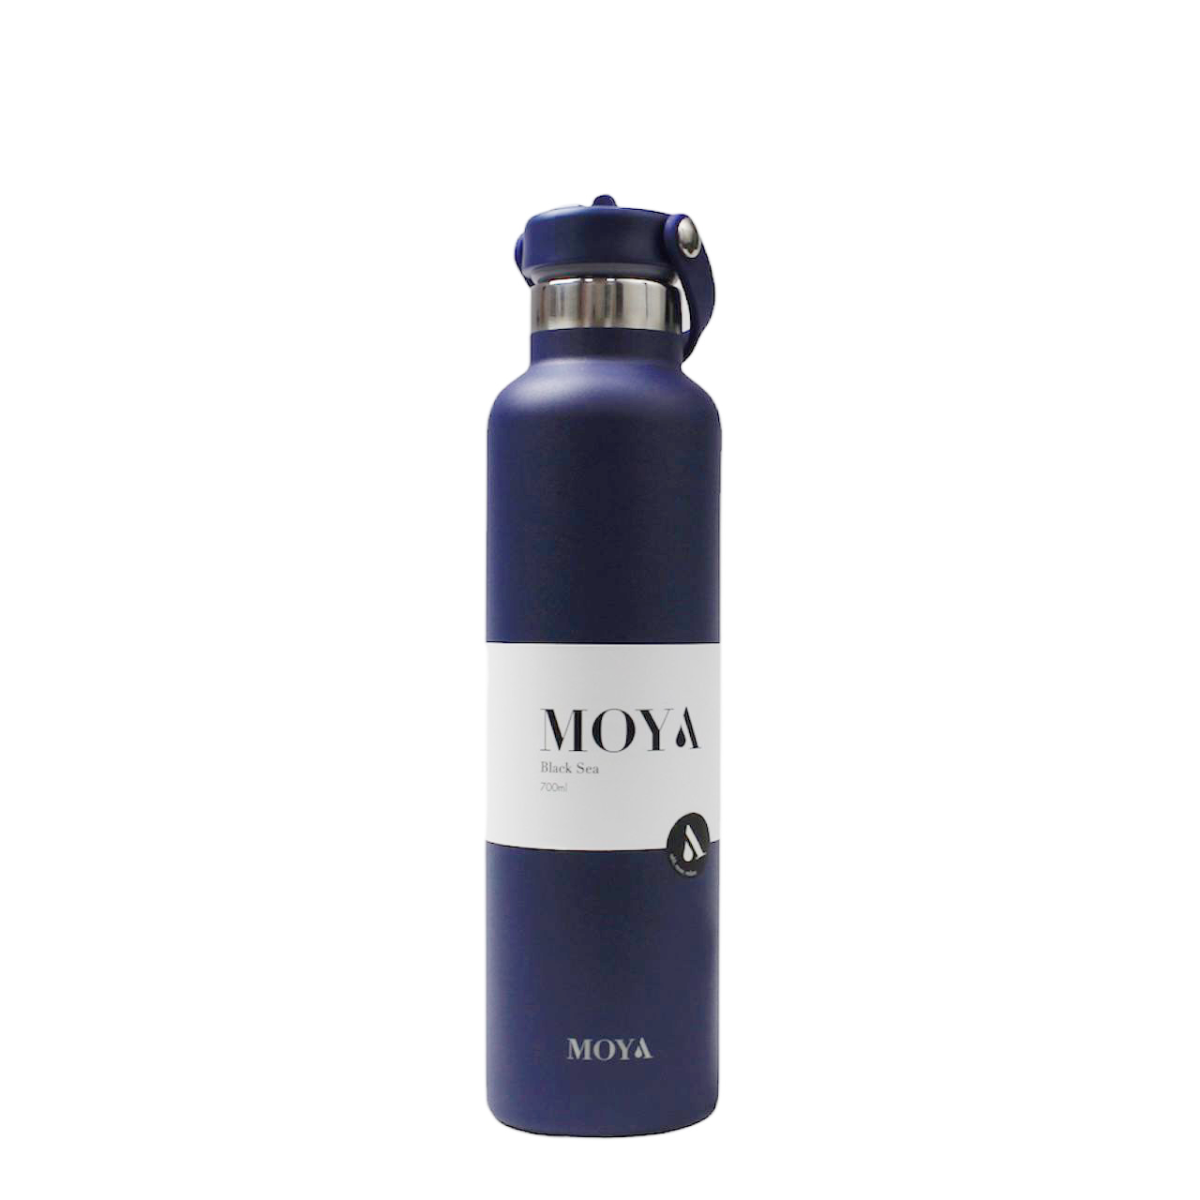 Moya “Black Sea” 700ml Insulated Sustainable Water Bottle Navy